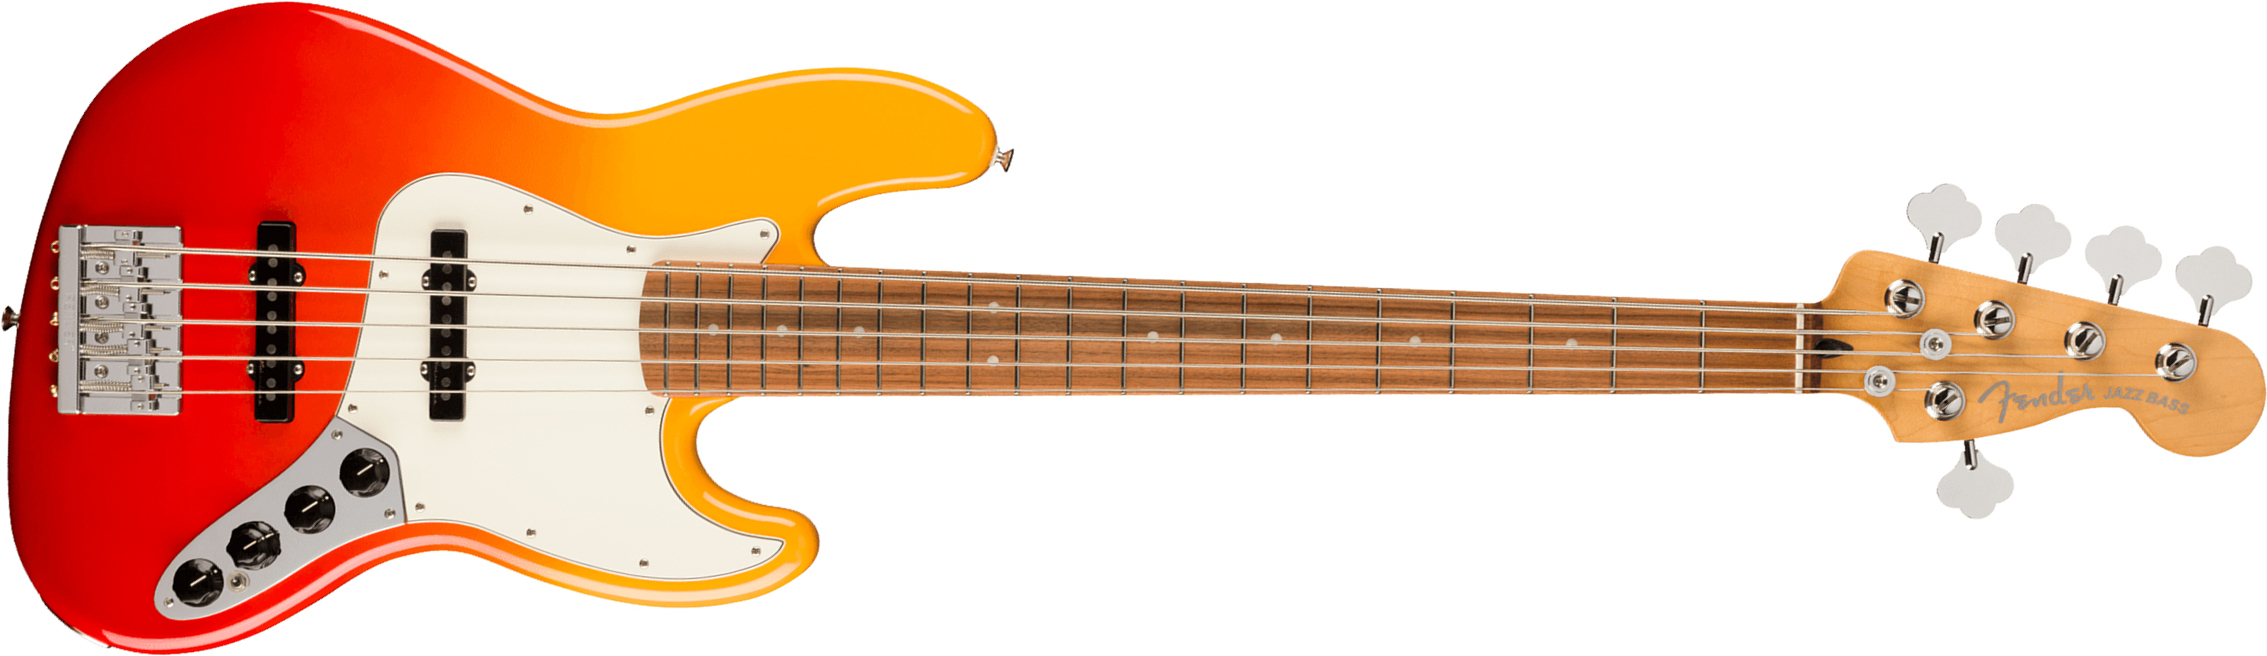 Fender Jazz Bass Player Plus V Mex 5c Active Pf - Tequila Sunrise - Solid body elektrische bas - Main picture